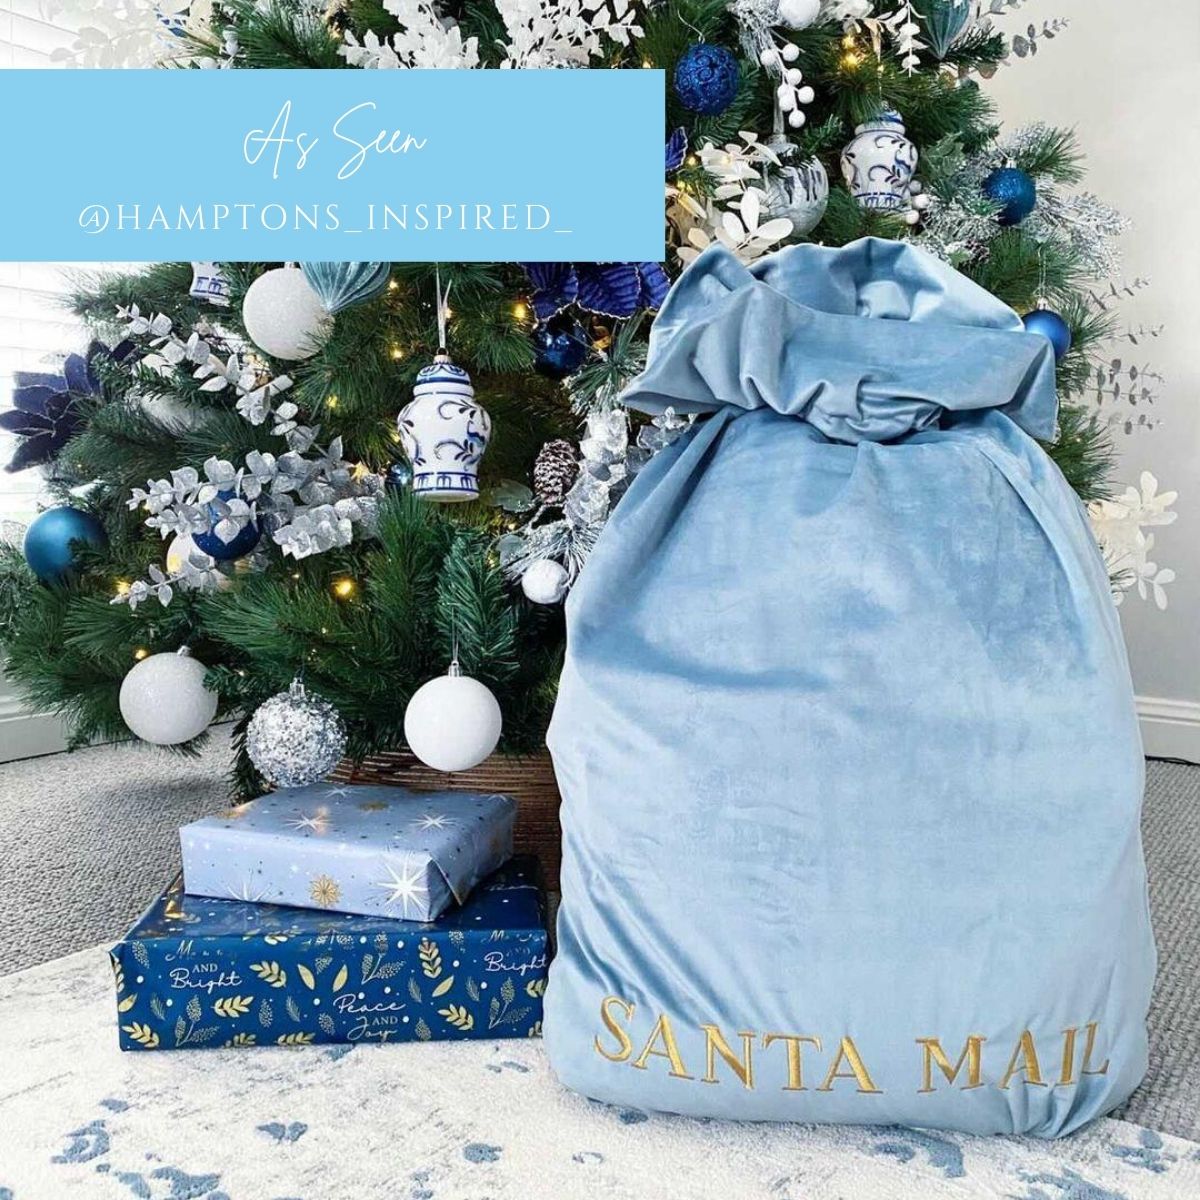 Luxury Christmas Gift Bag, Personalised Christmas Gift Bags